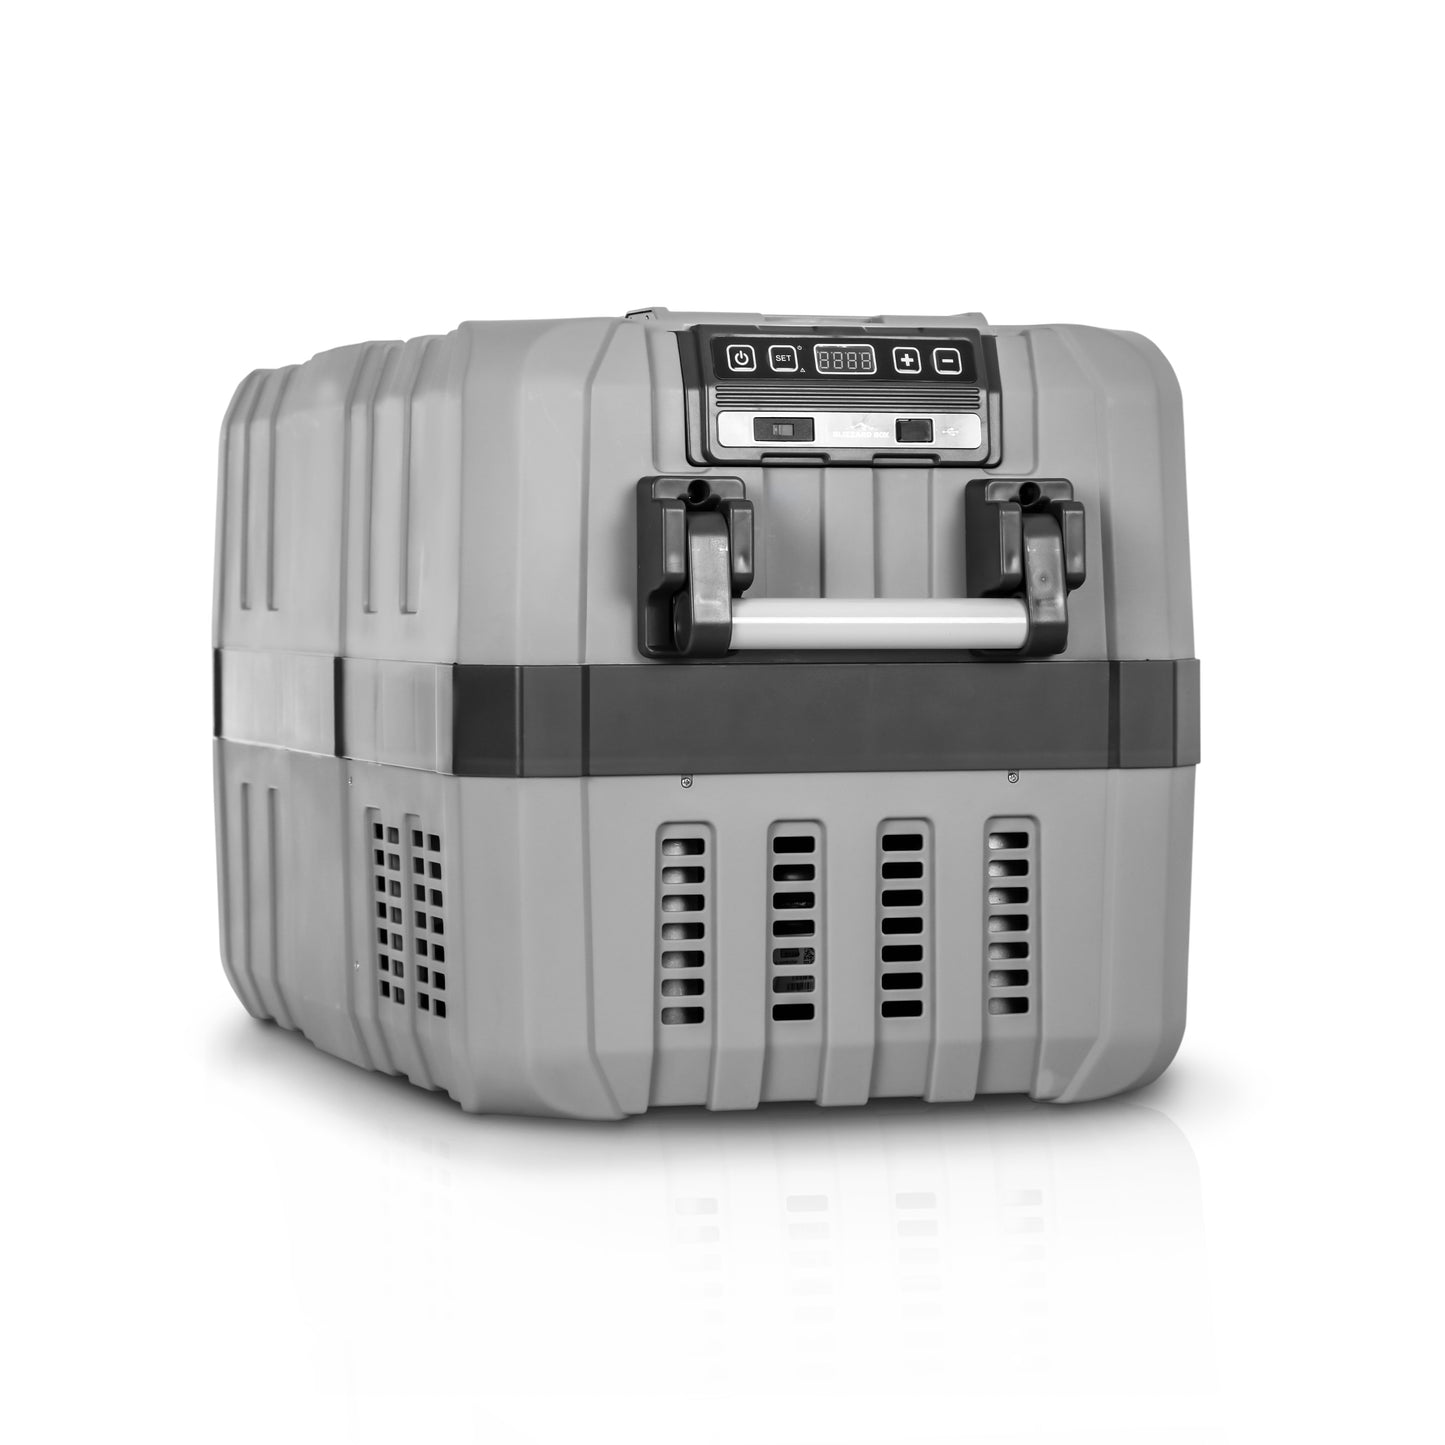 PROJECT X - AC57245-1 - Refrigerator - Blizzard Box - 41QT/38L Electric Portable Fridge / Freezer - P/N: AC57245-1